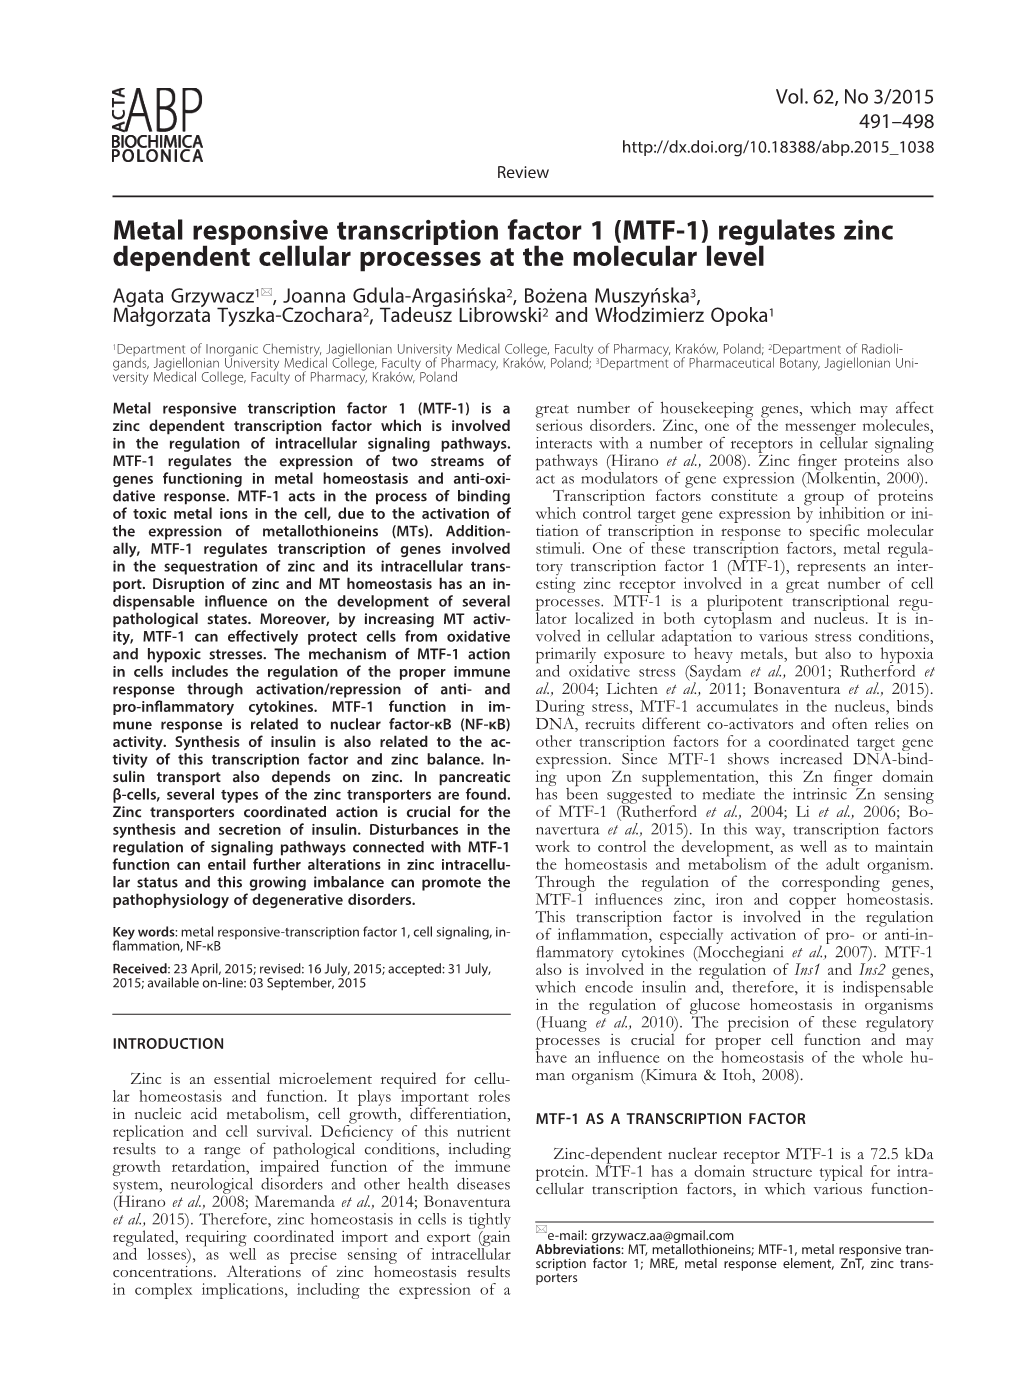 Metal Responsive Transcription Factor 1 (MTF-1) Regulates Zinc Dependent